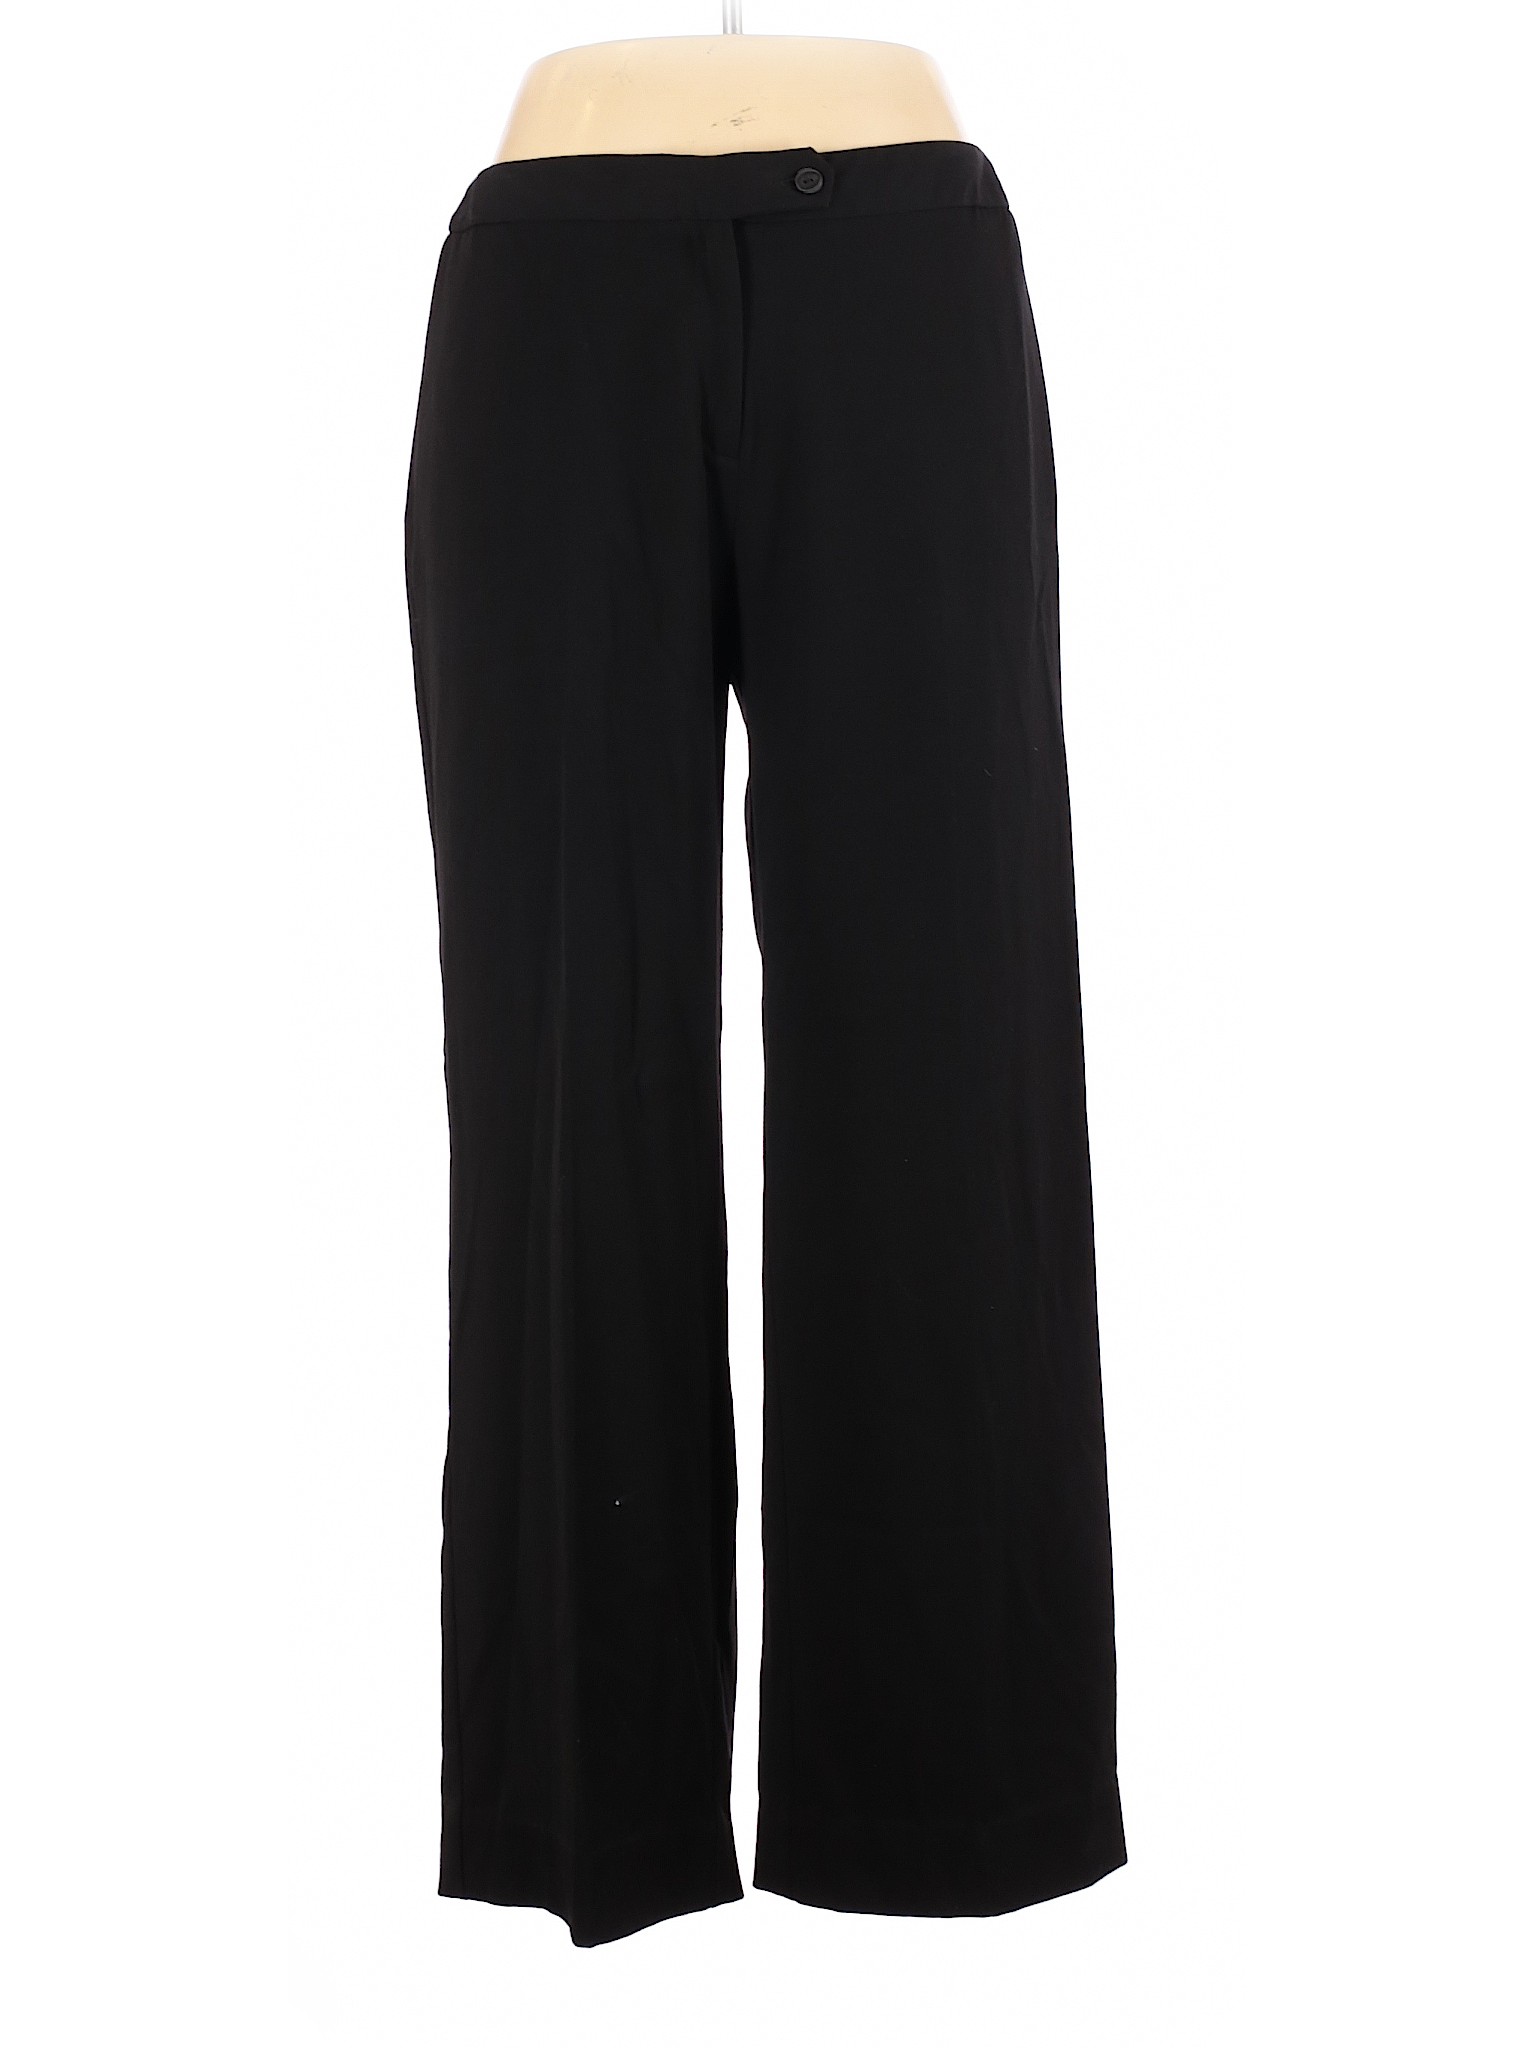 Rena Rowan Women Black Dress Pants 14 | eBay